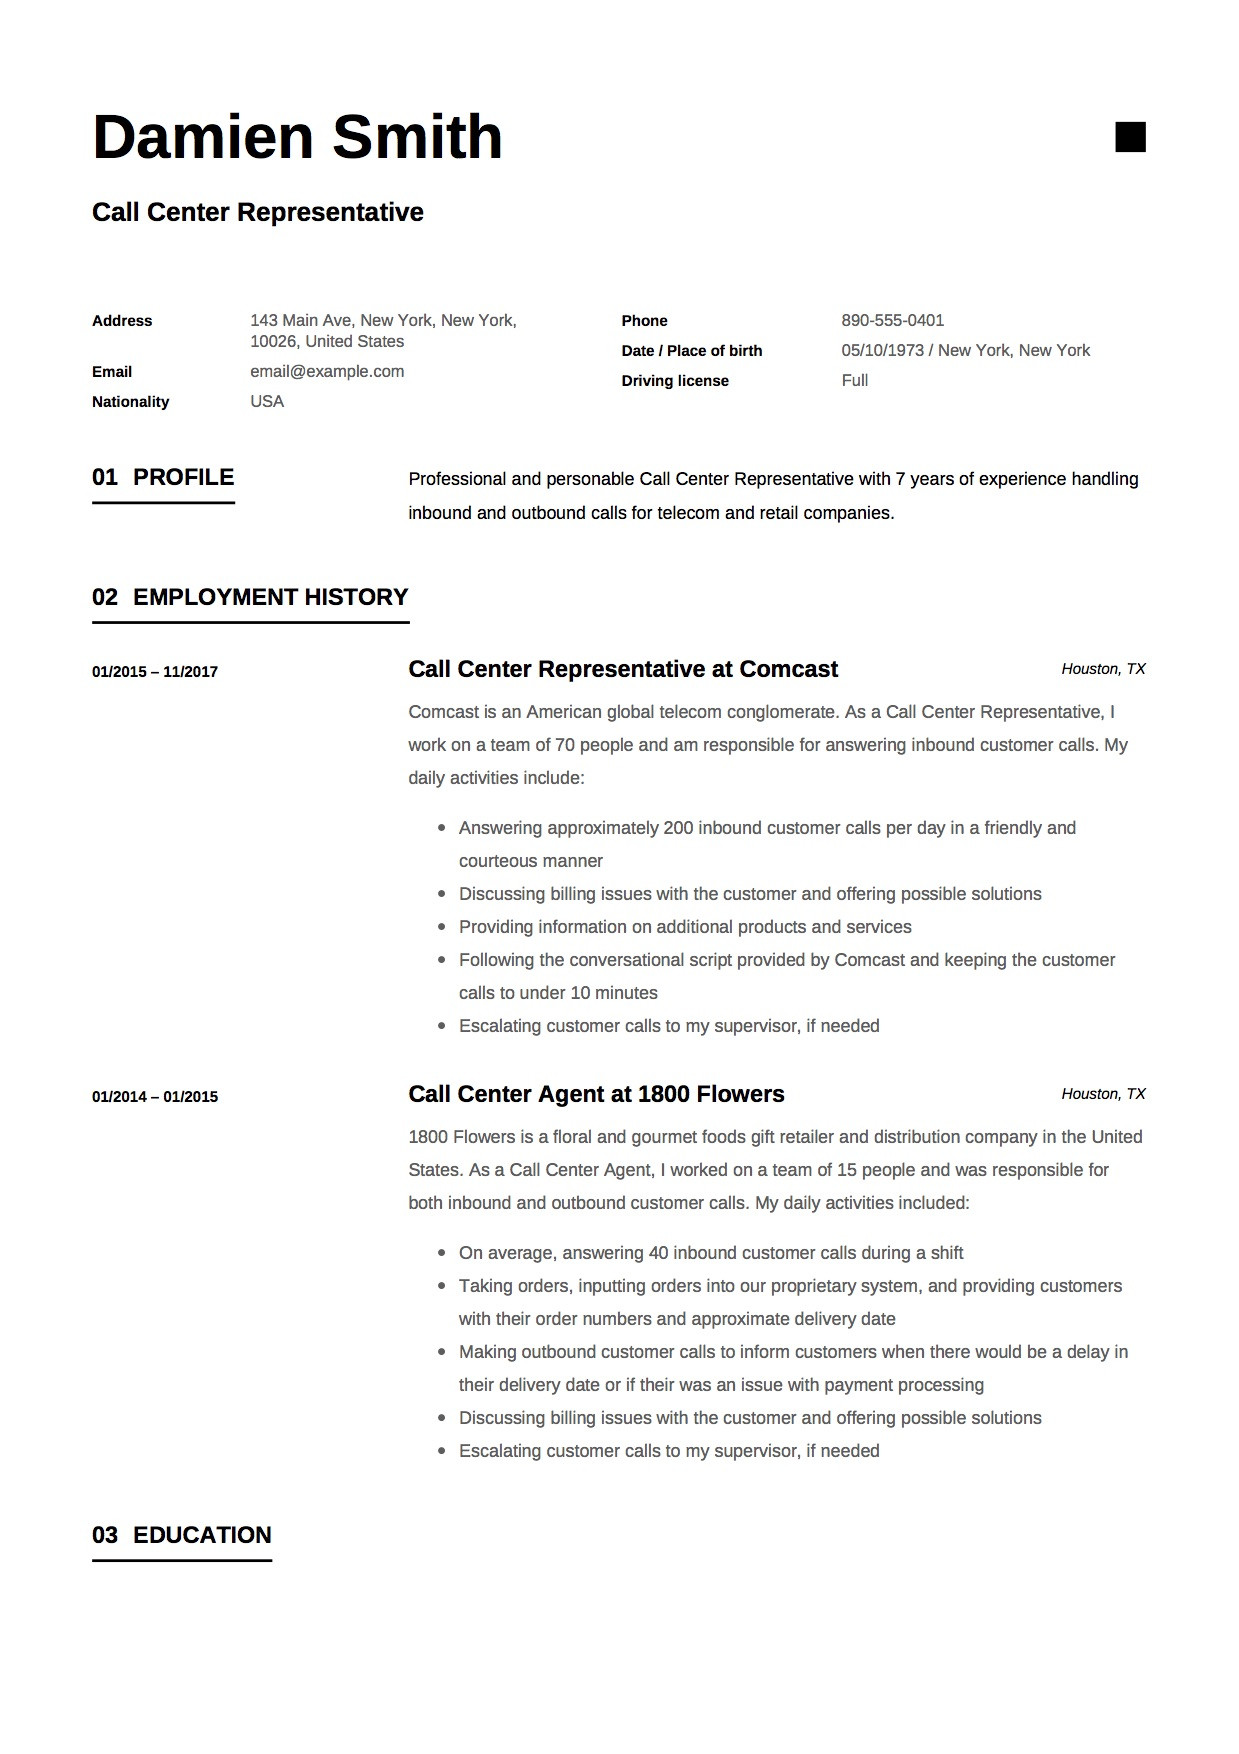 Resume Samples for Telemarketing Sales Representative Call Center Resume & Guide (lancarrezekiq 12 Free Downloads) 2021